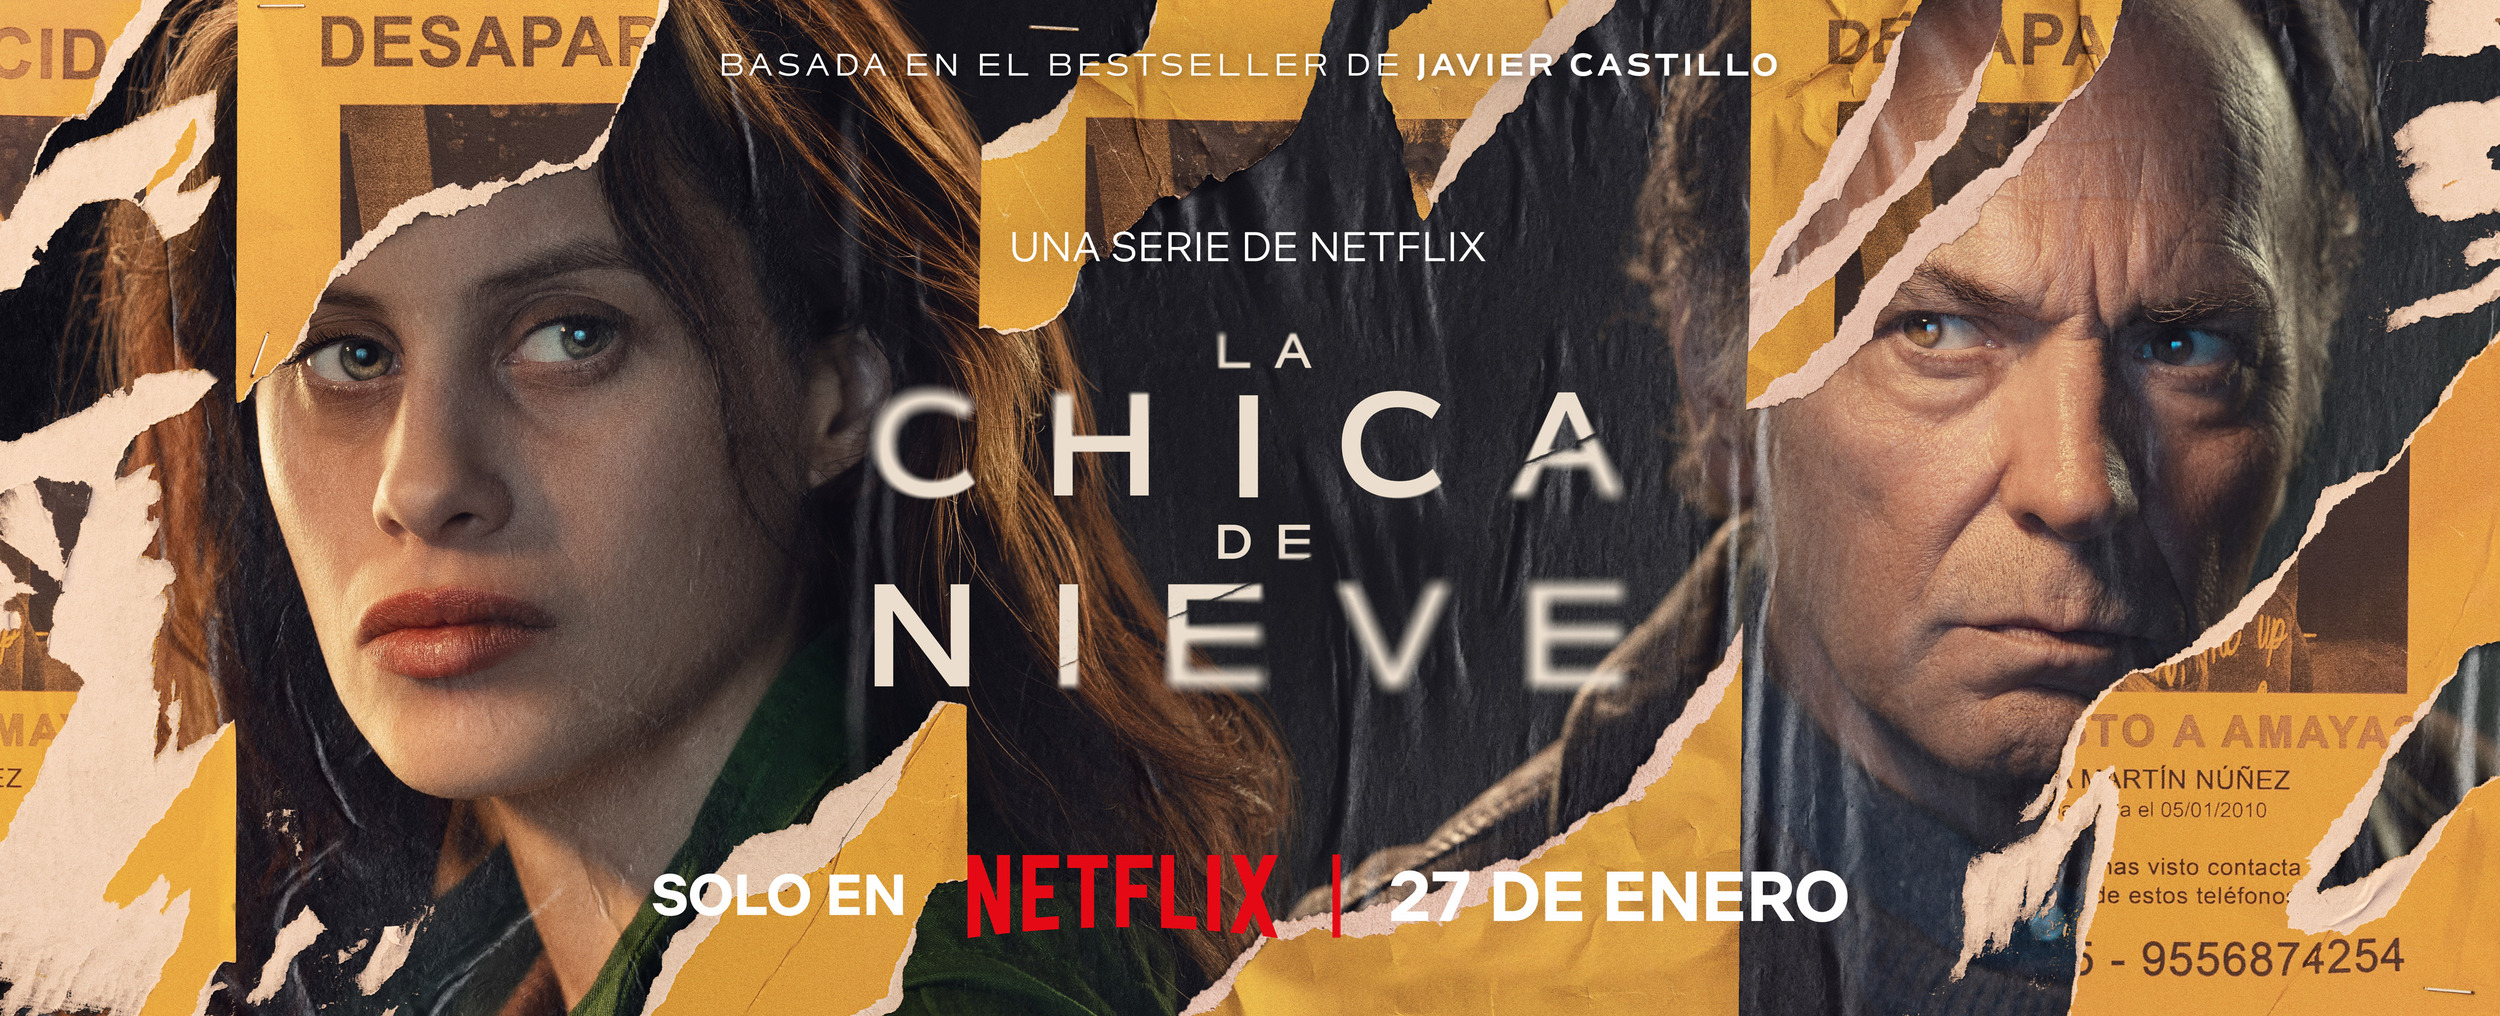 Mega Sized TV Poster Image for La chica de nieve (#5 of 6)